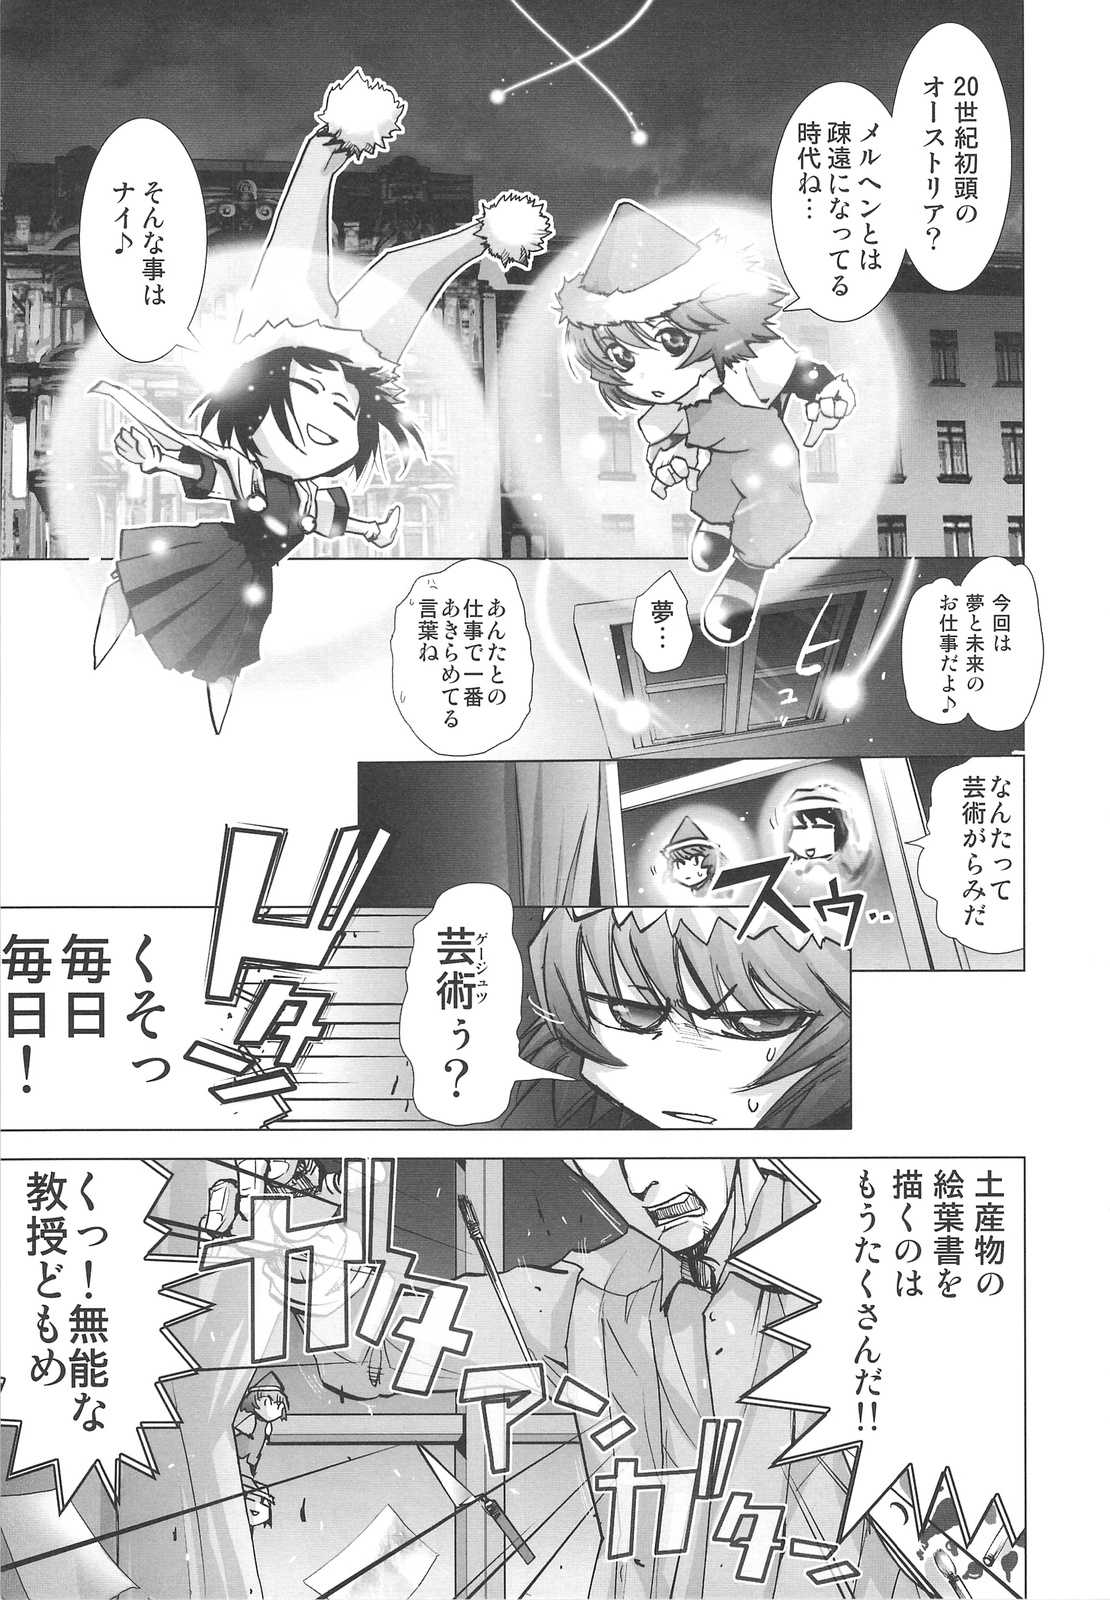 [Rikudoukan] DEADLY Riku Michi Vol.2 